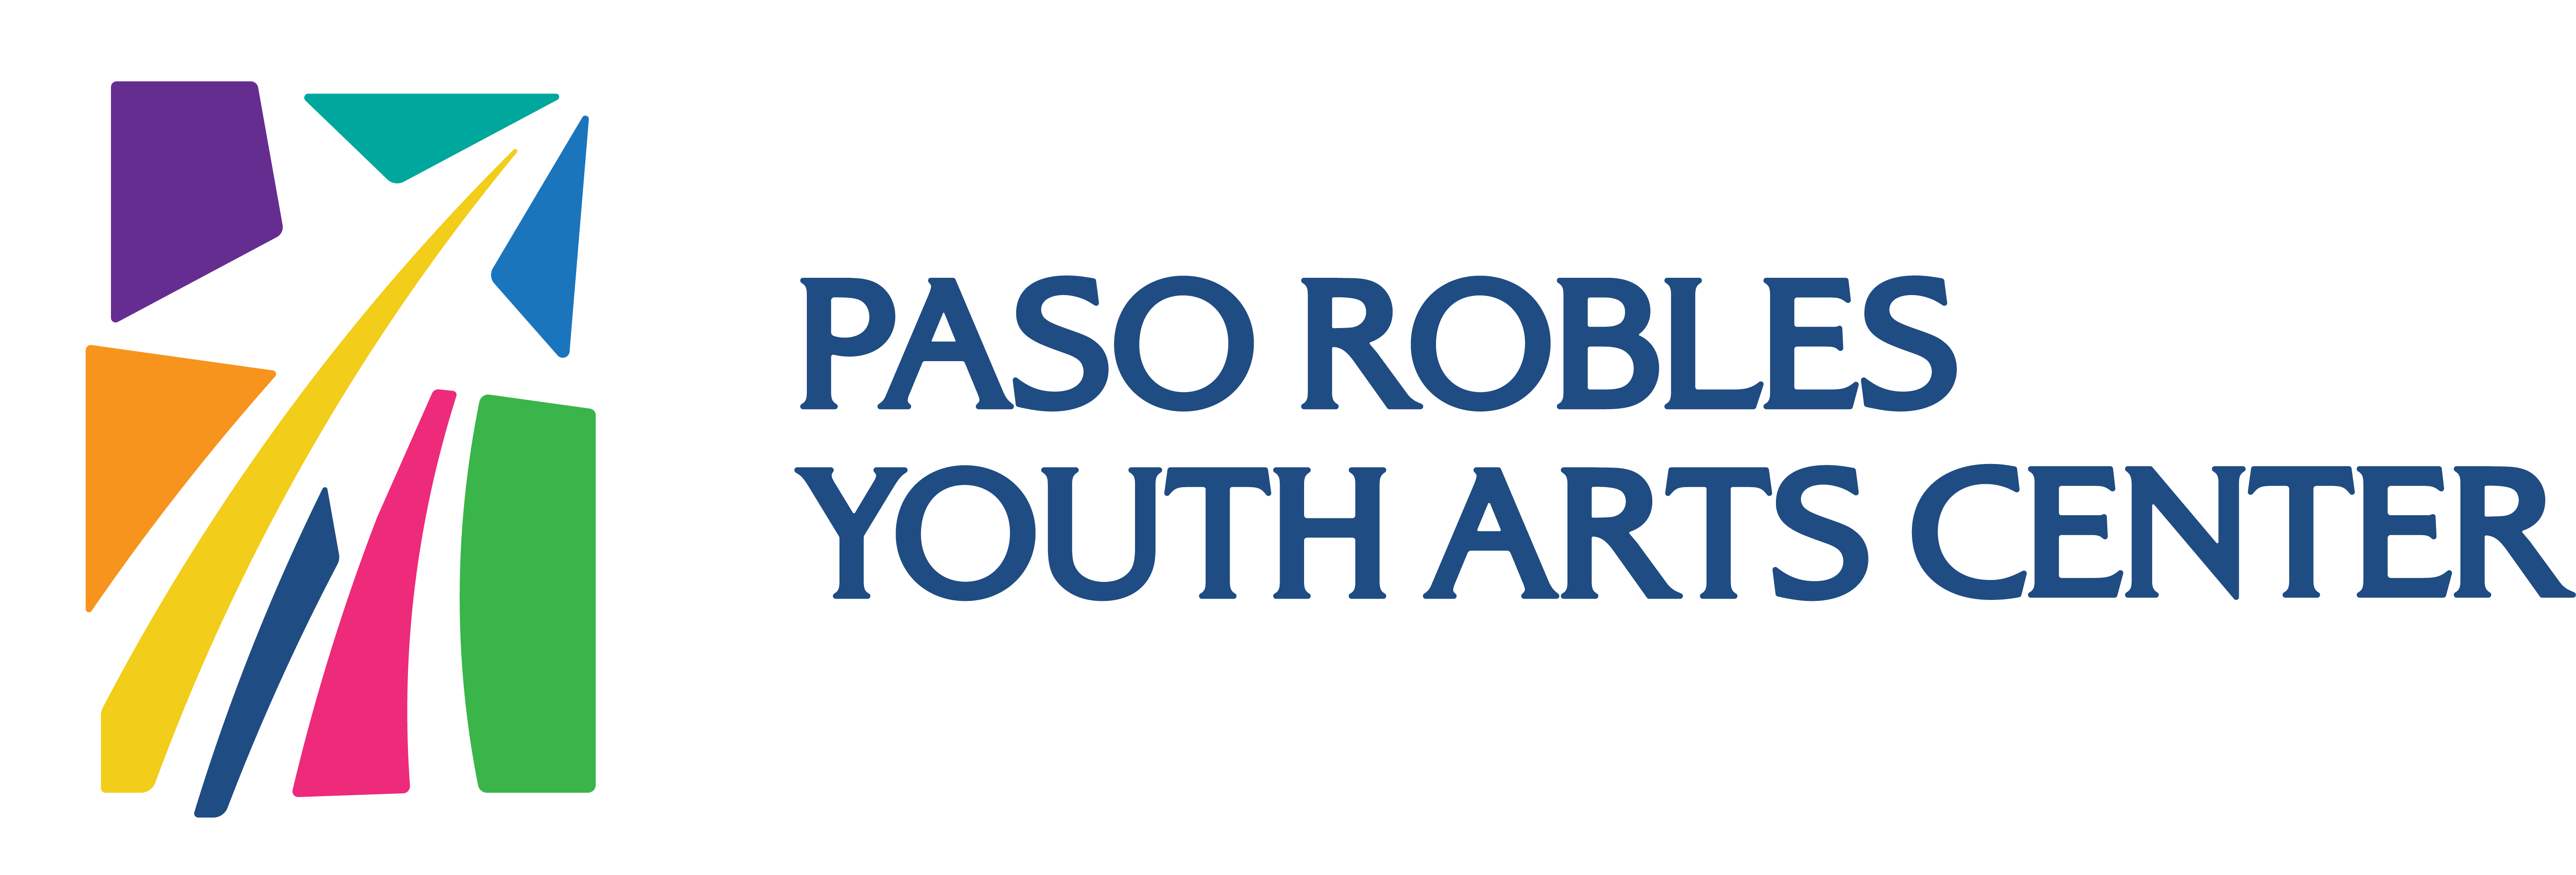 Paso Robles Youth Arts Center logo